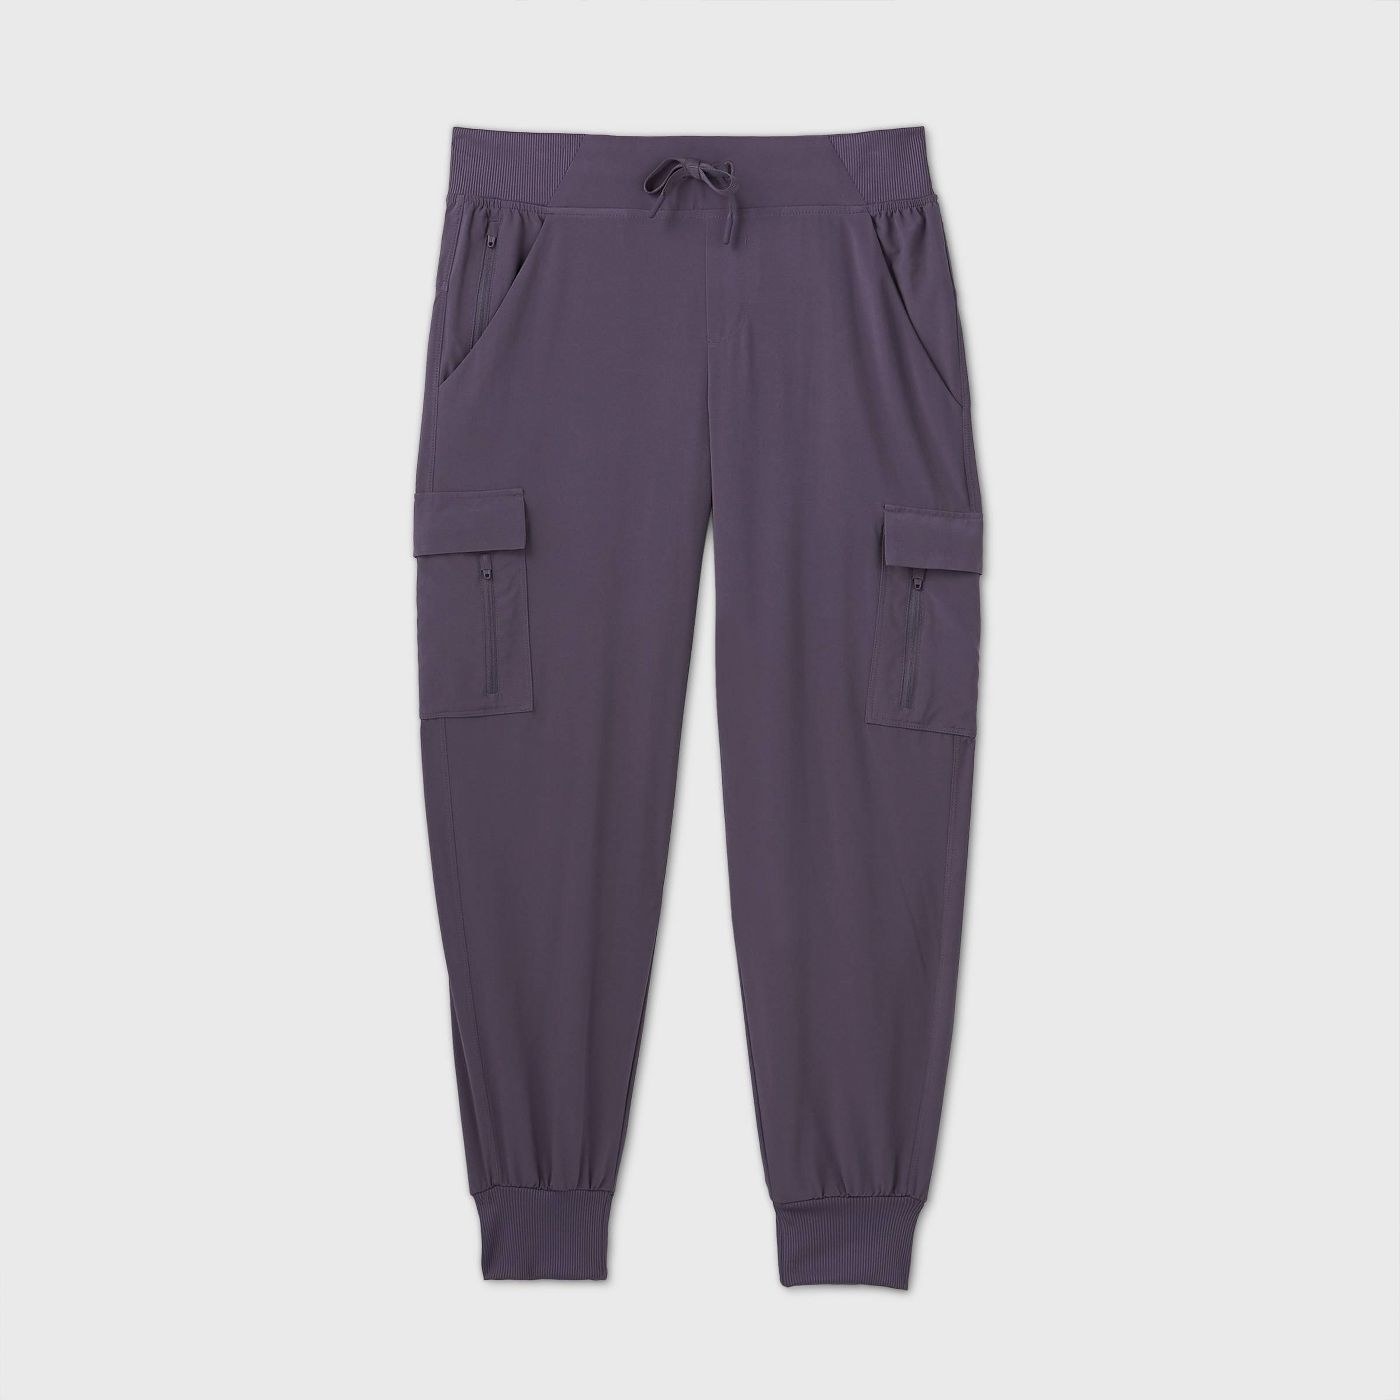 Purple cargo pants